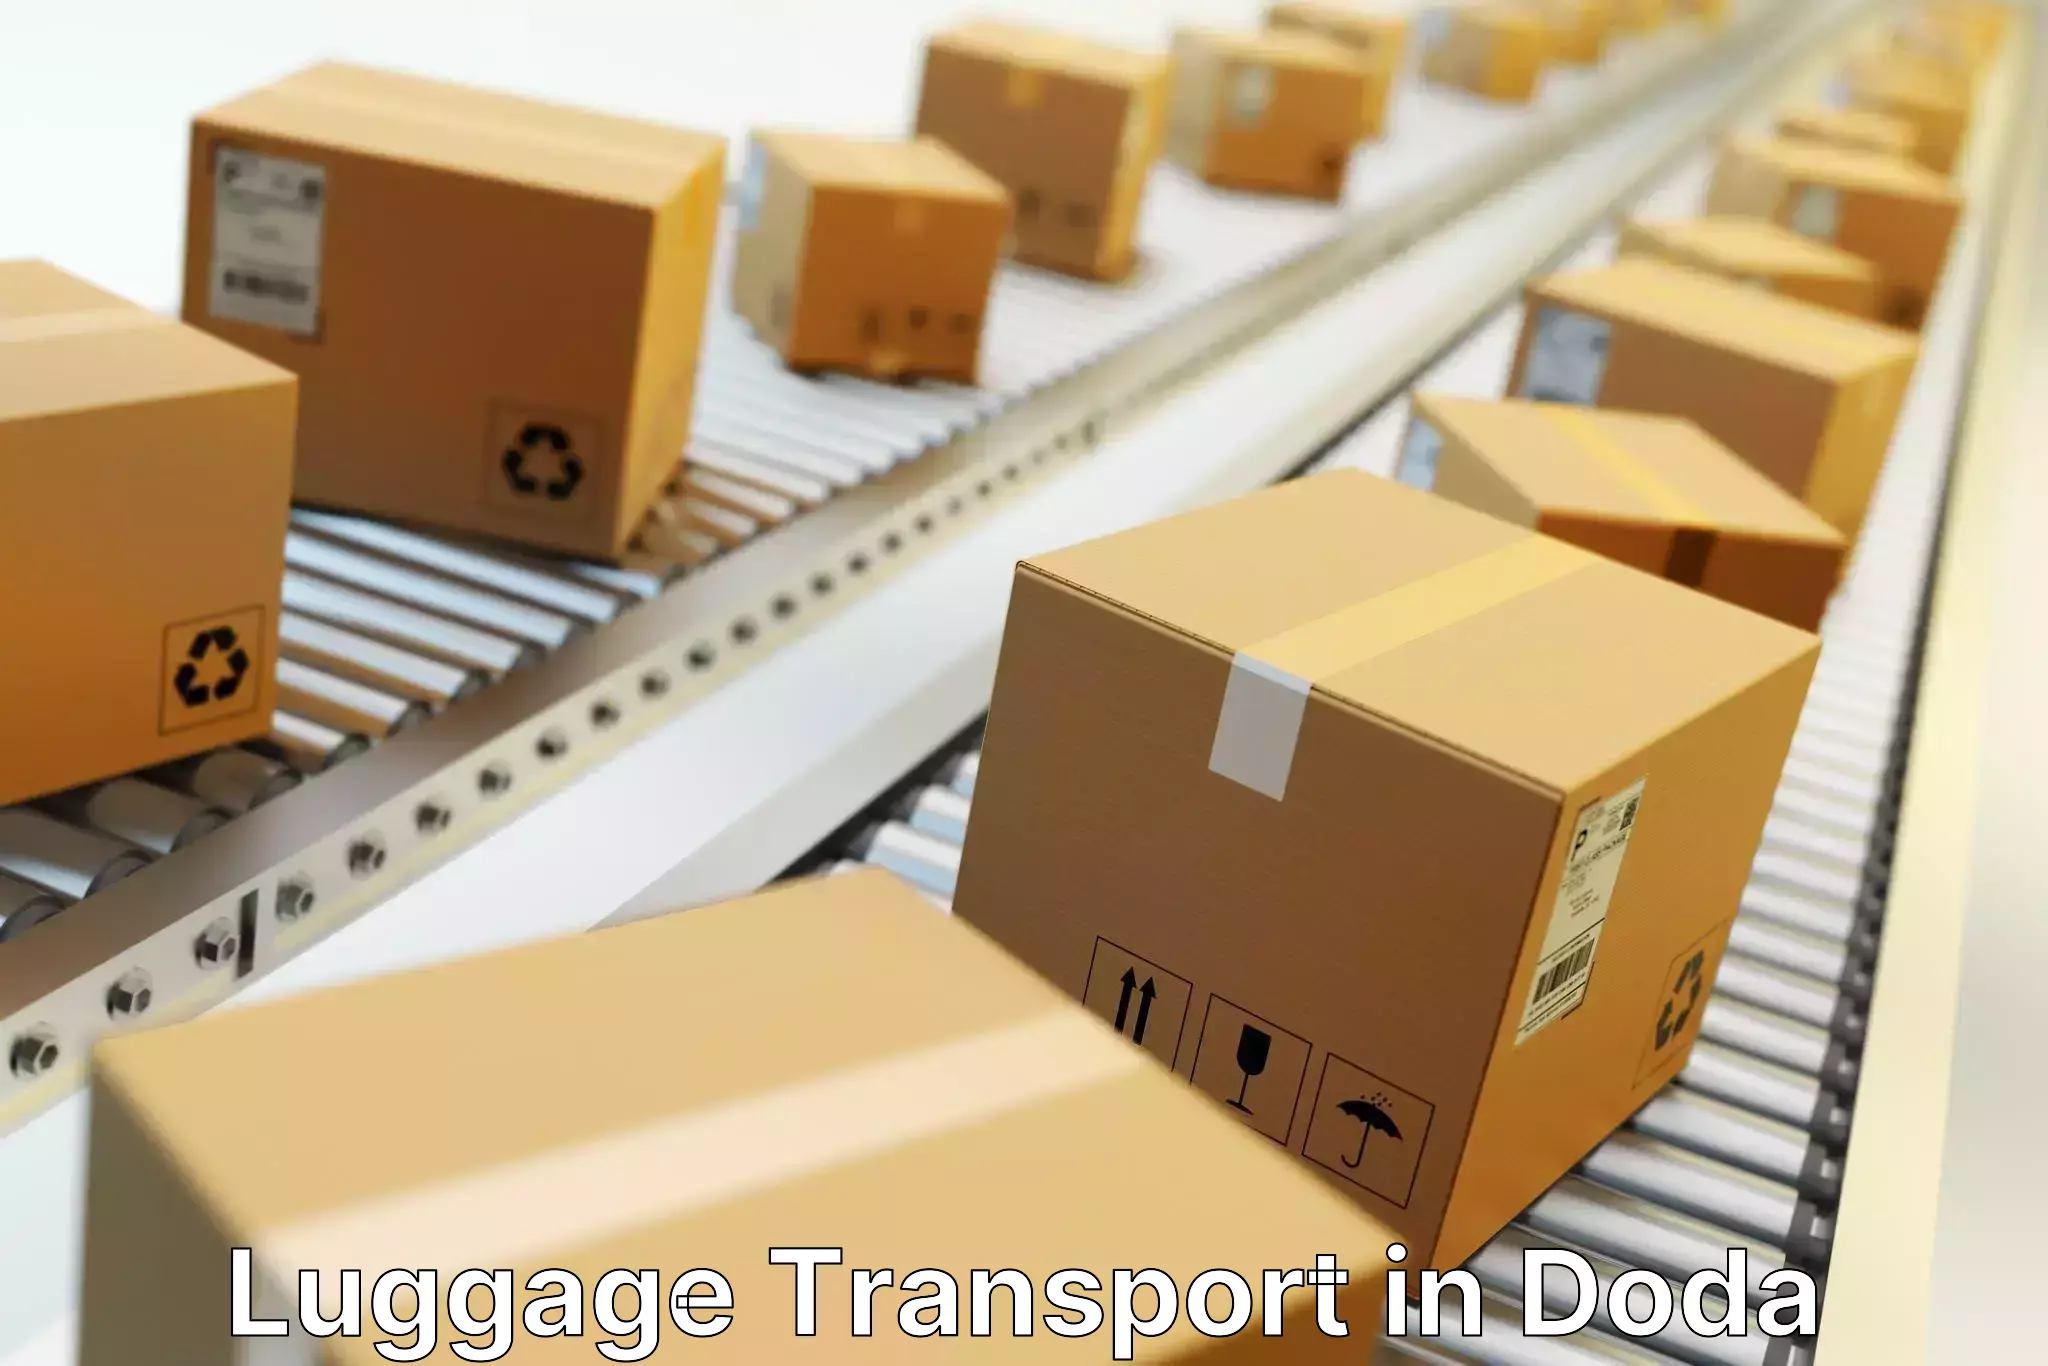 High-quality baggage shipment in Doda